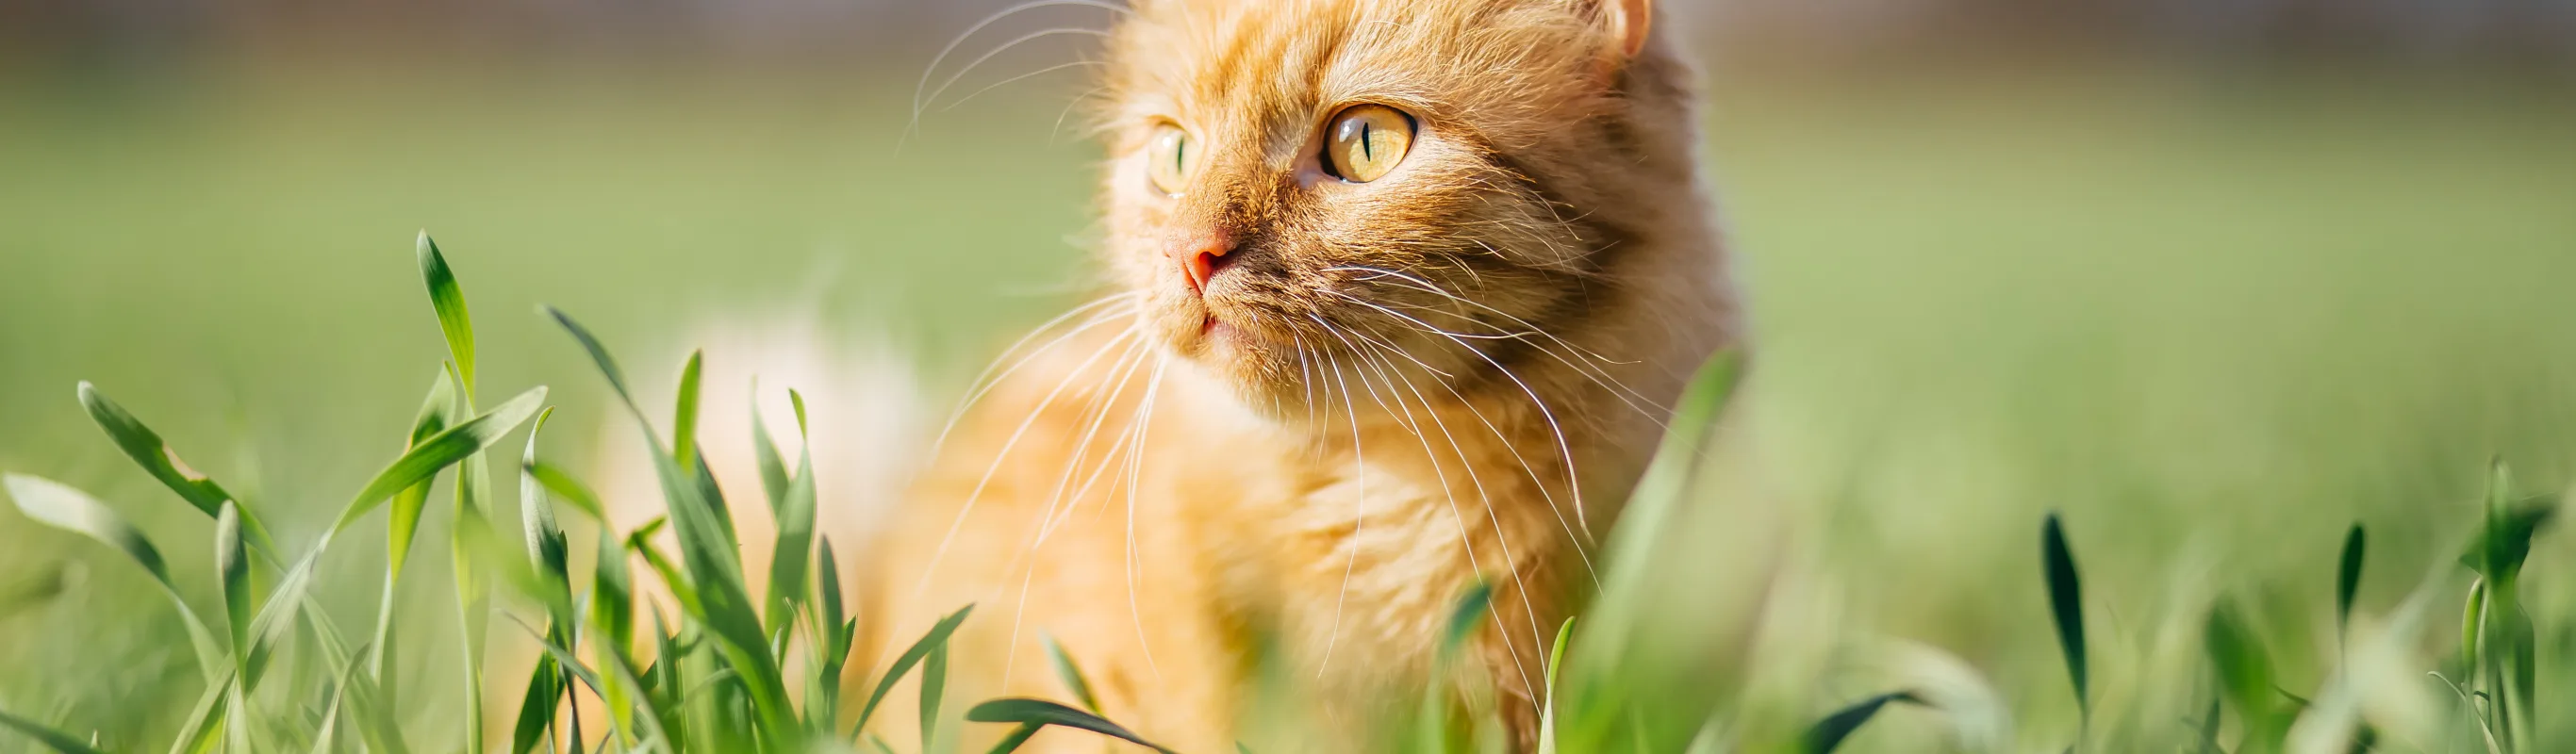 Orange cat sitting in grass